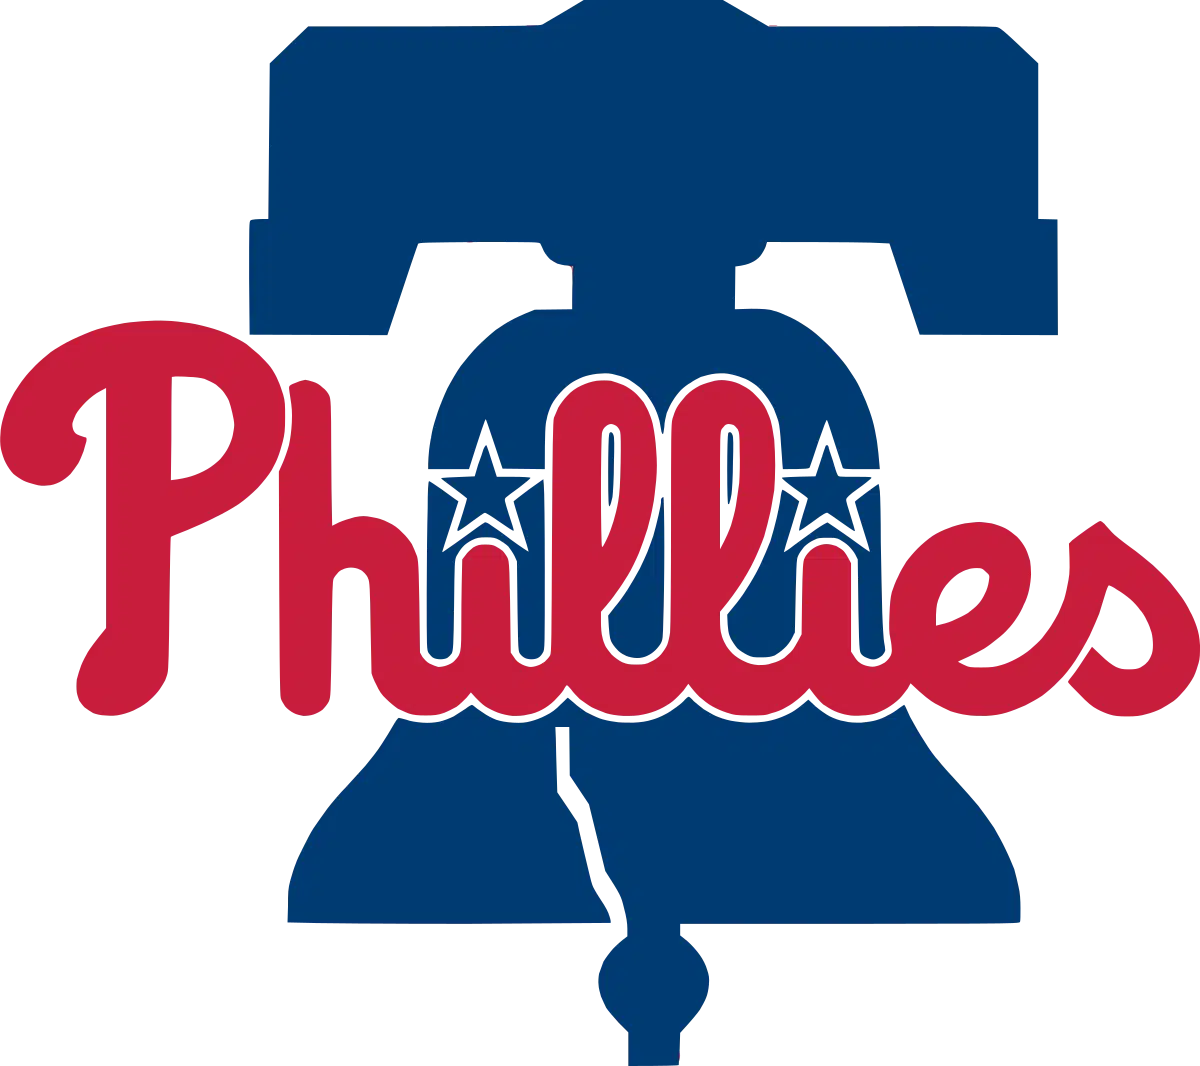 Philadelphia Phillies Reach 10,000 Wins